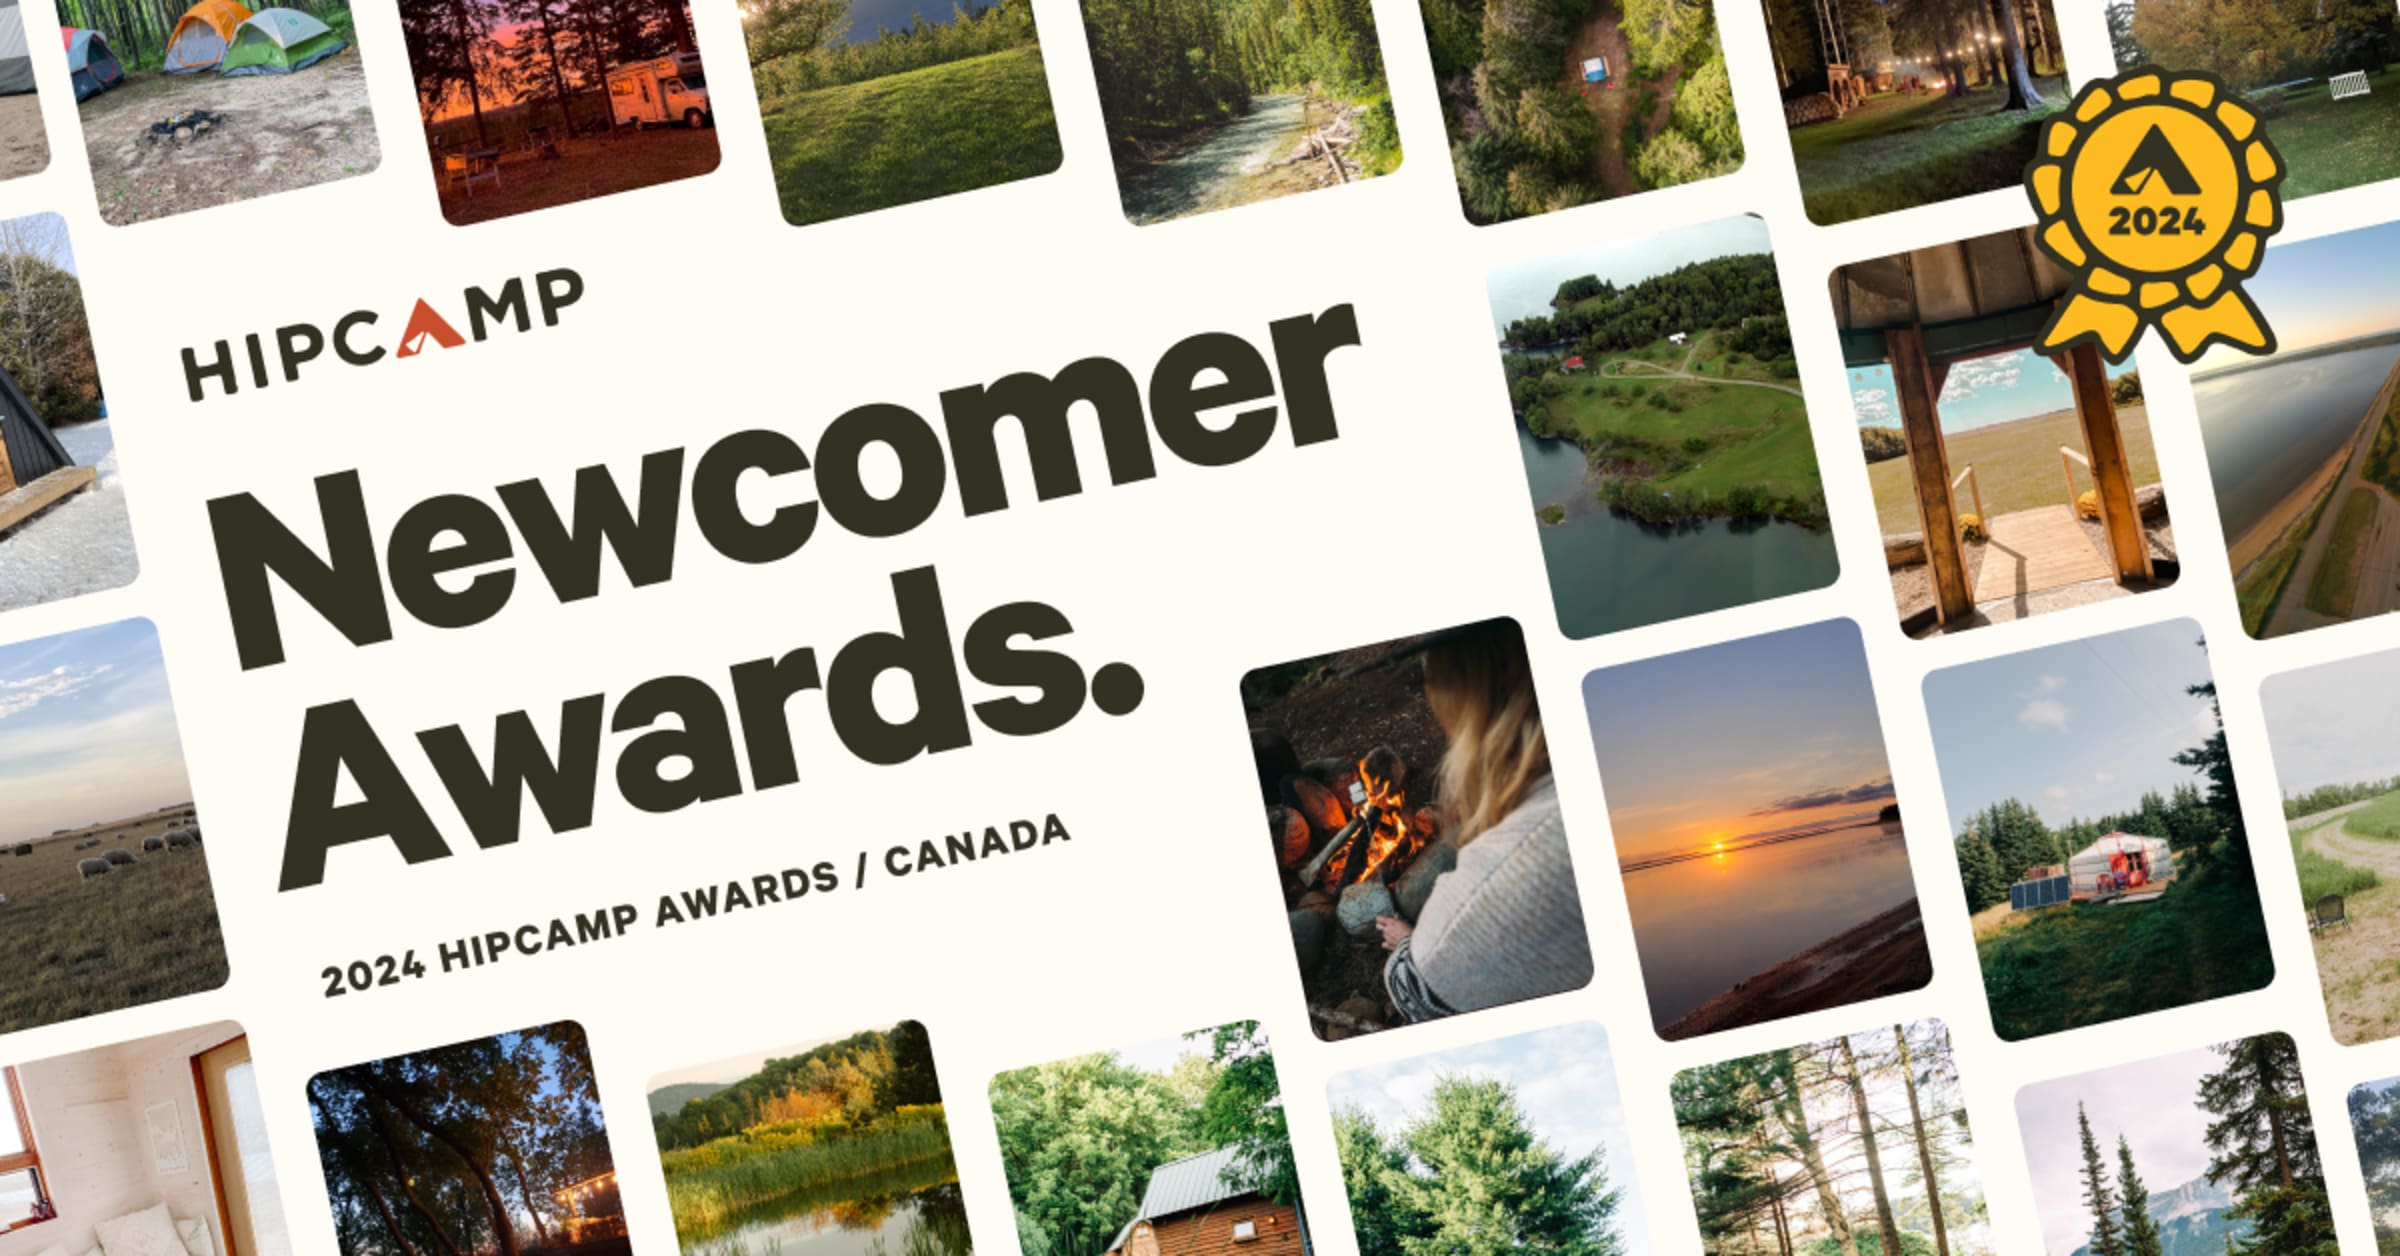 Hipcamp Newcomer Awards 2024: Canada Edition